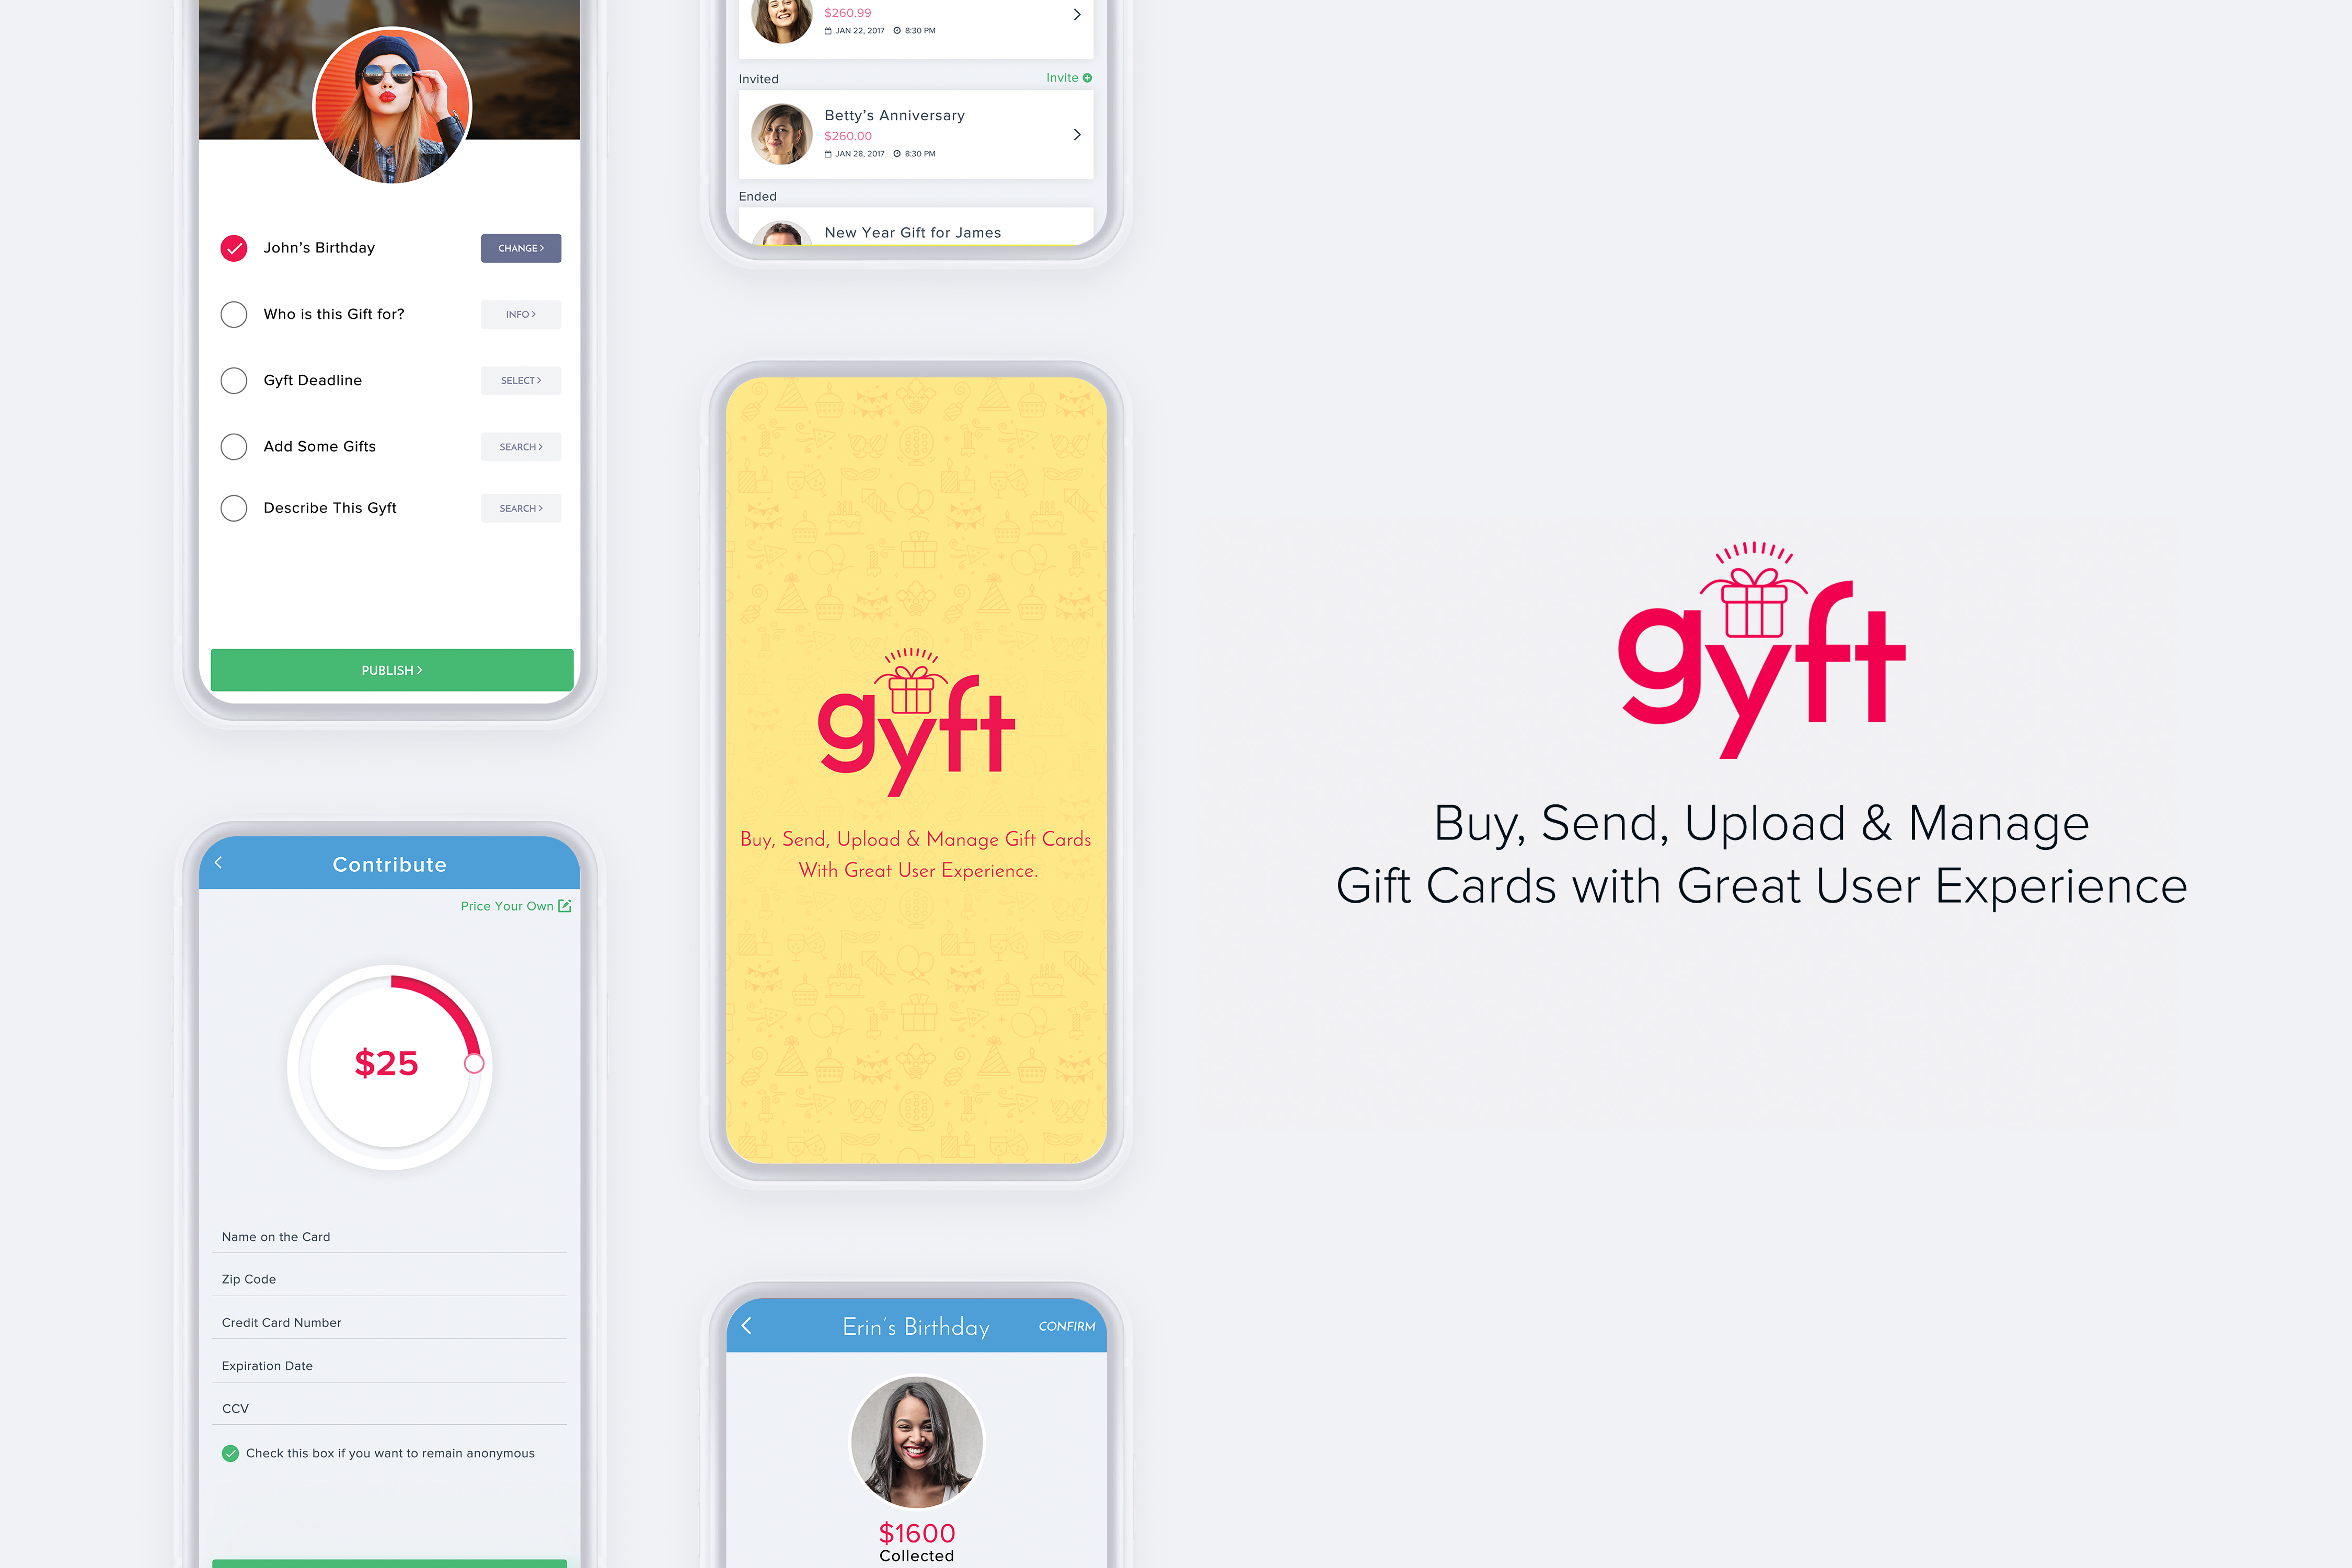 Hire UI Freelancer for GYFT mobile app